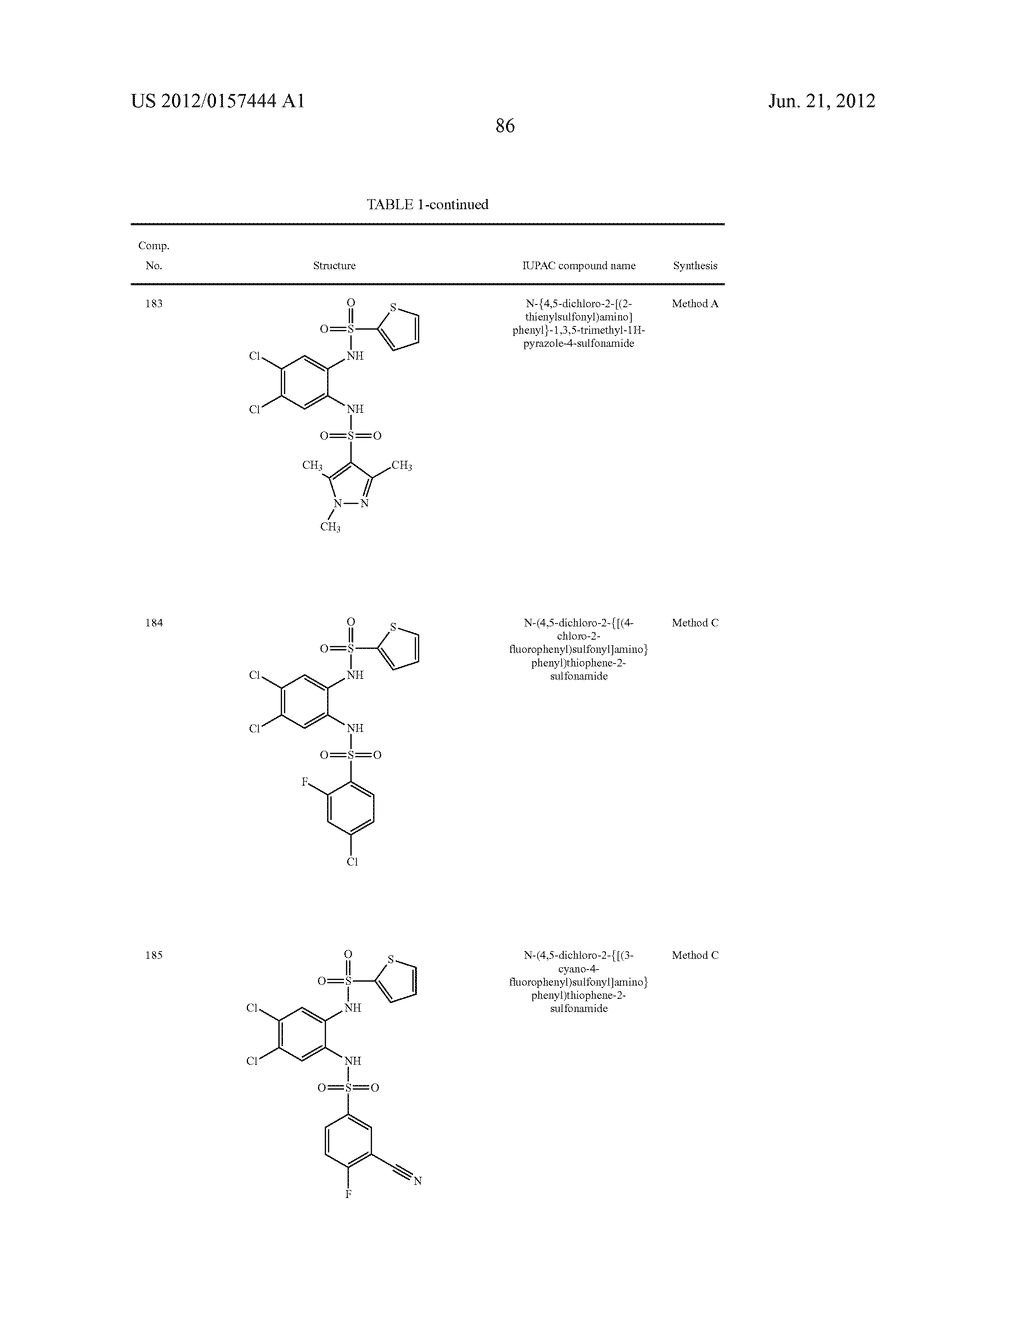 NOVEL 1,2- BIS-SULFONAMIDE DERIVATIVES AS CHEMOKINE RECEPTOR MODULATORS - diagram, schematic, and image 87